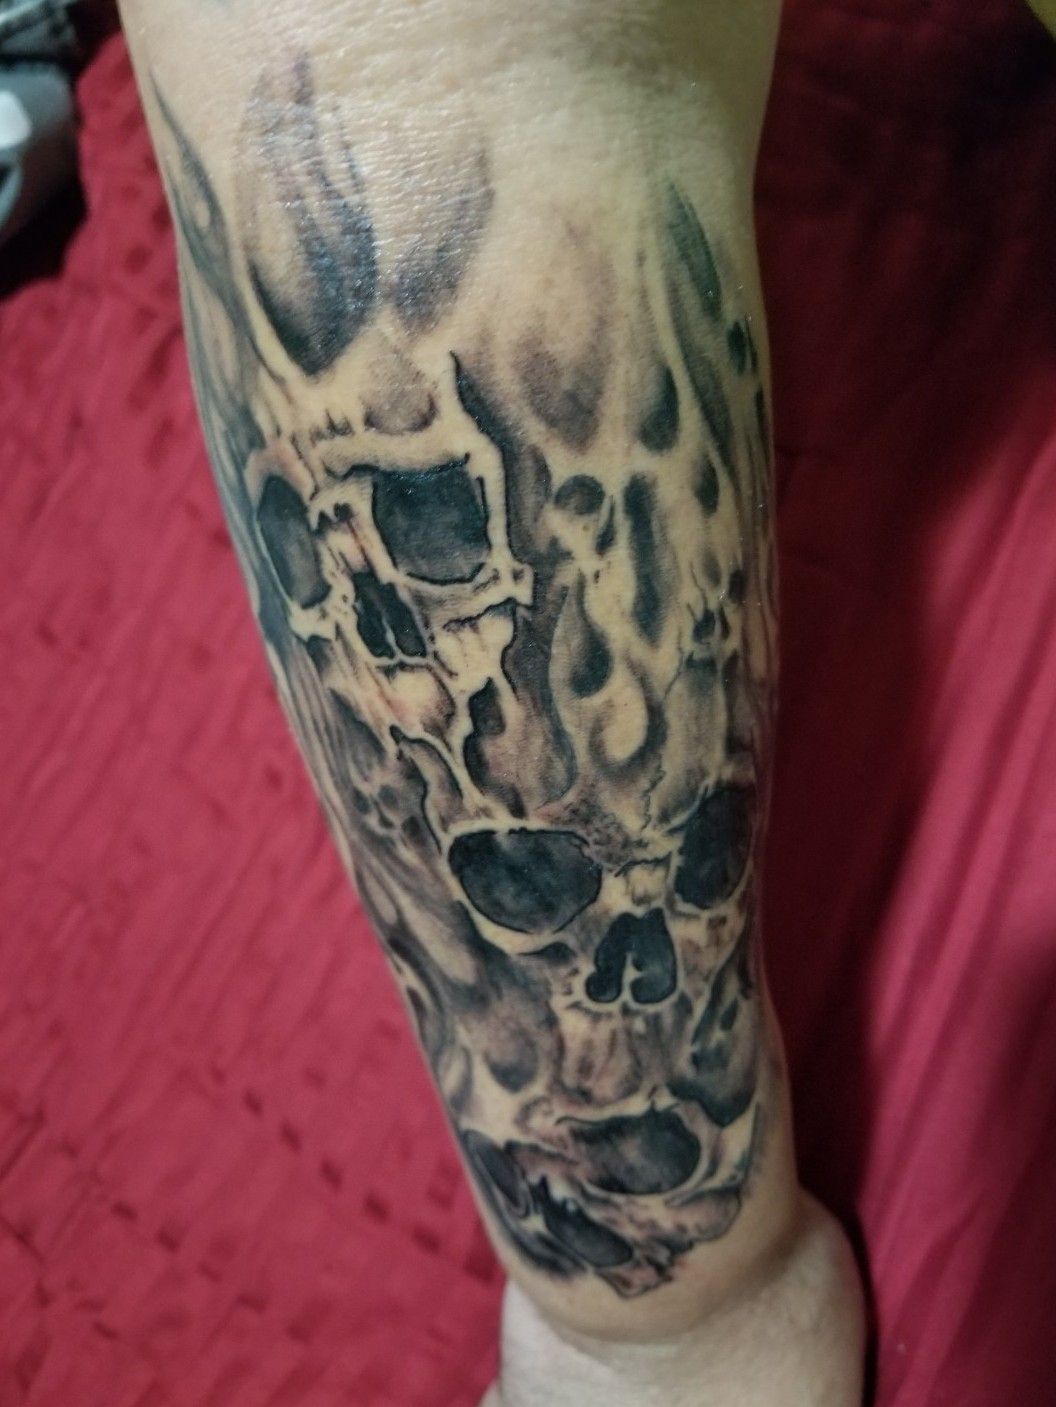 BlackHatTattooDublin Twitterren Skull and smoke effect for this wonderful  sleeve tattoo skulltattoo realisticblackandgray realistictattoo  dublin besttattooartist httpstcolza1kbbWMu  Twitter